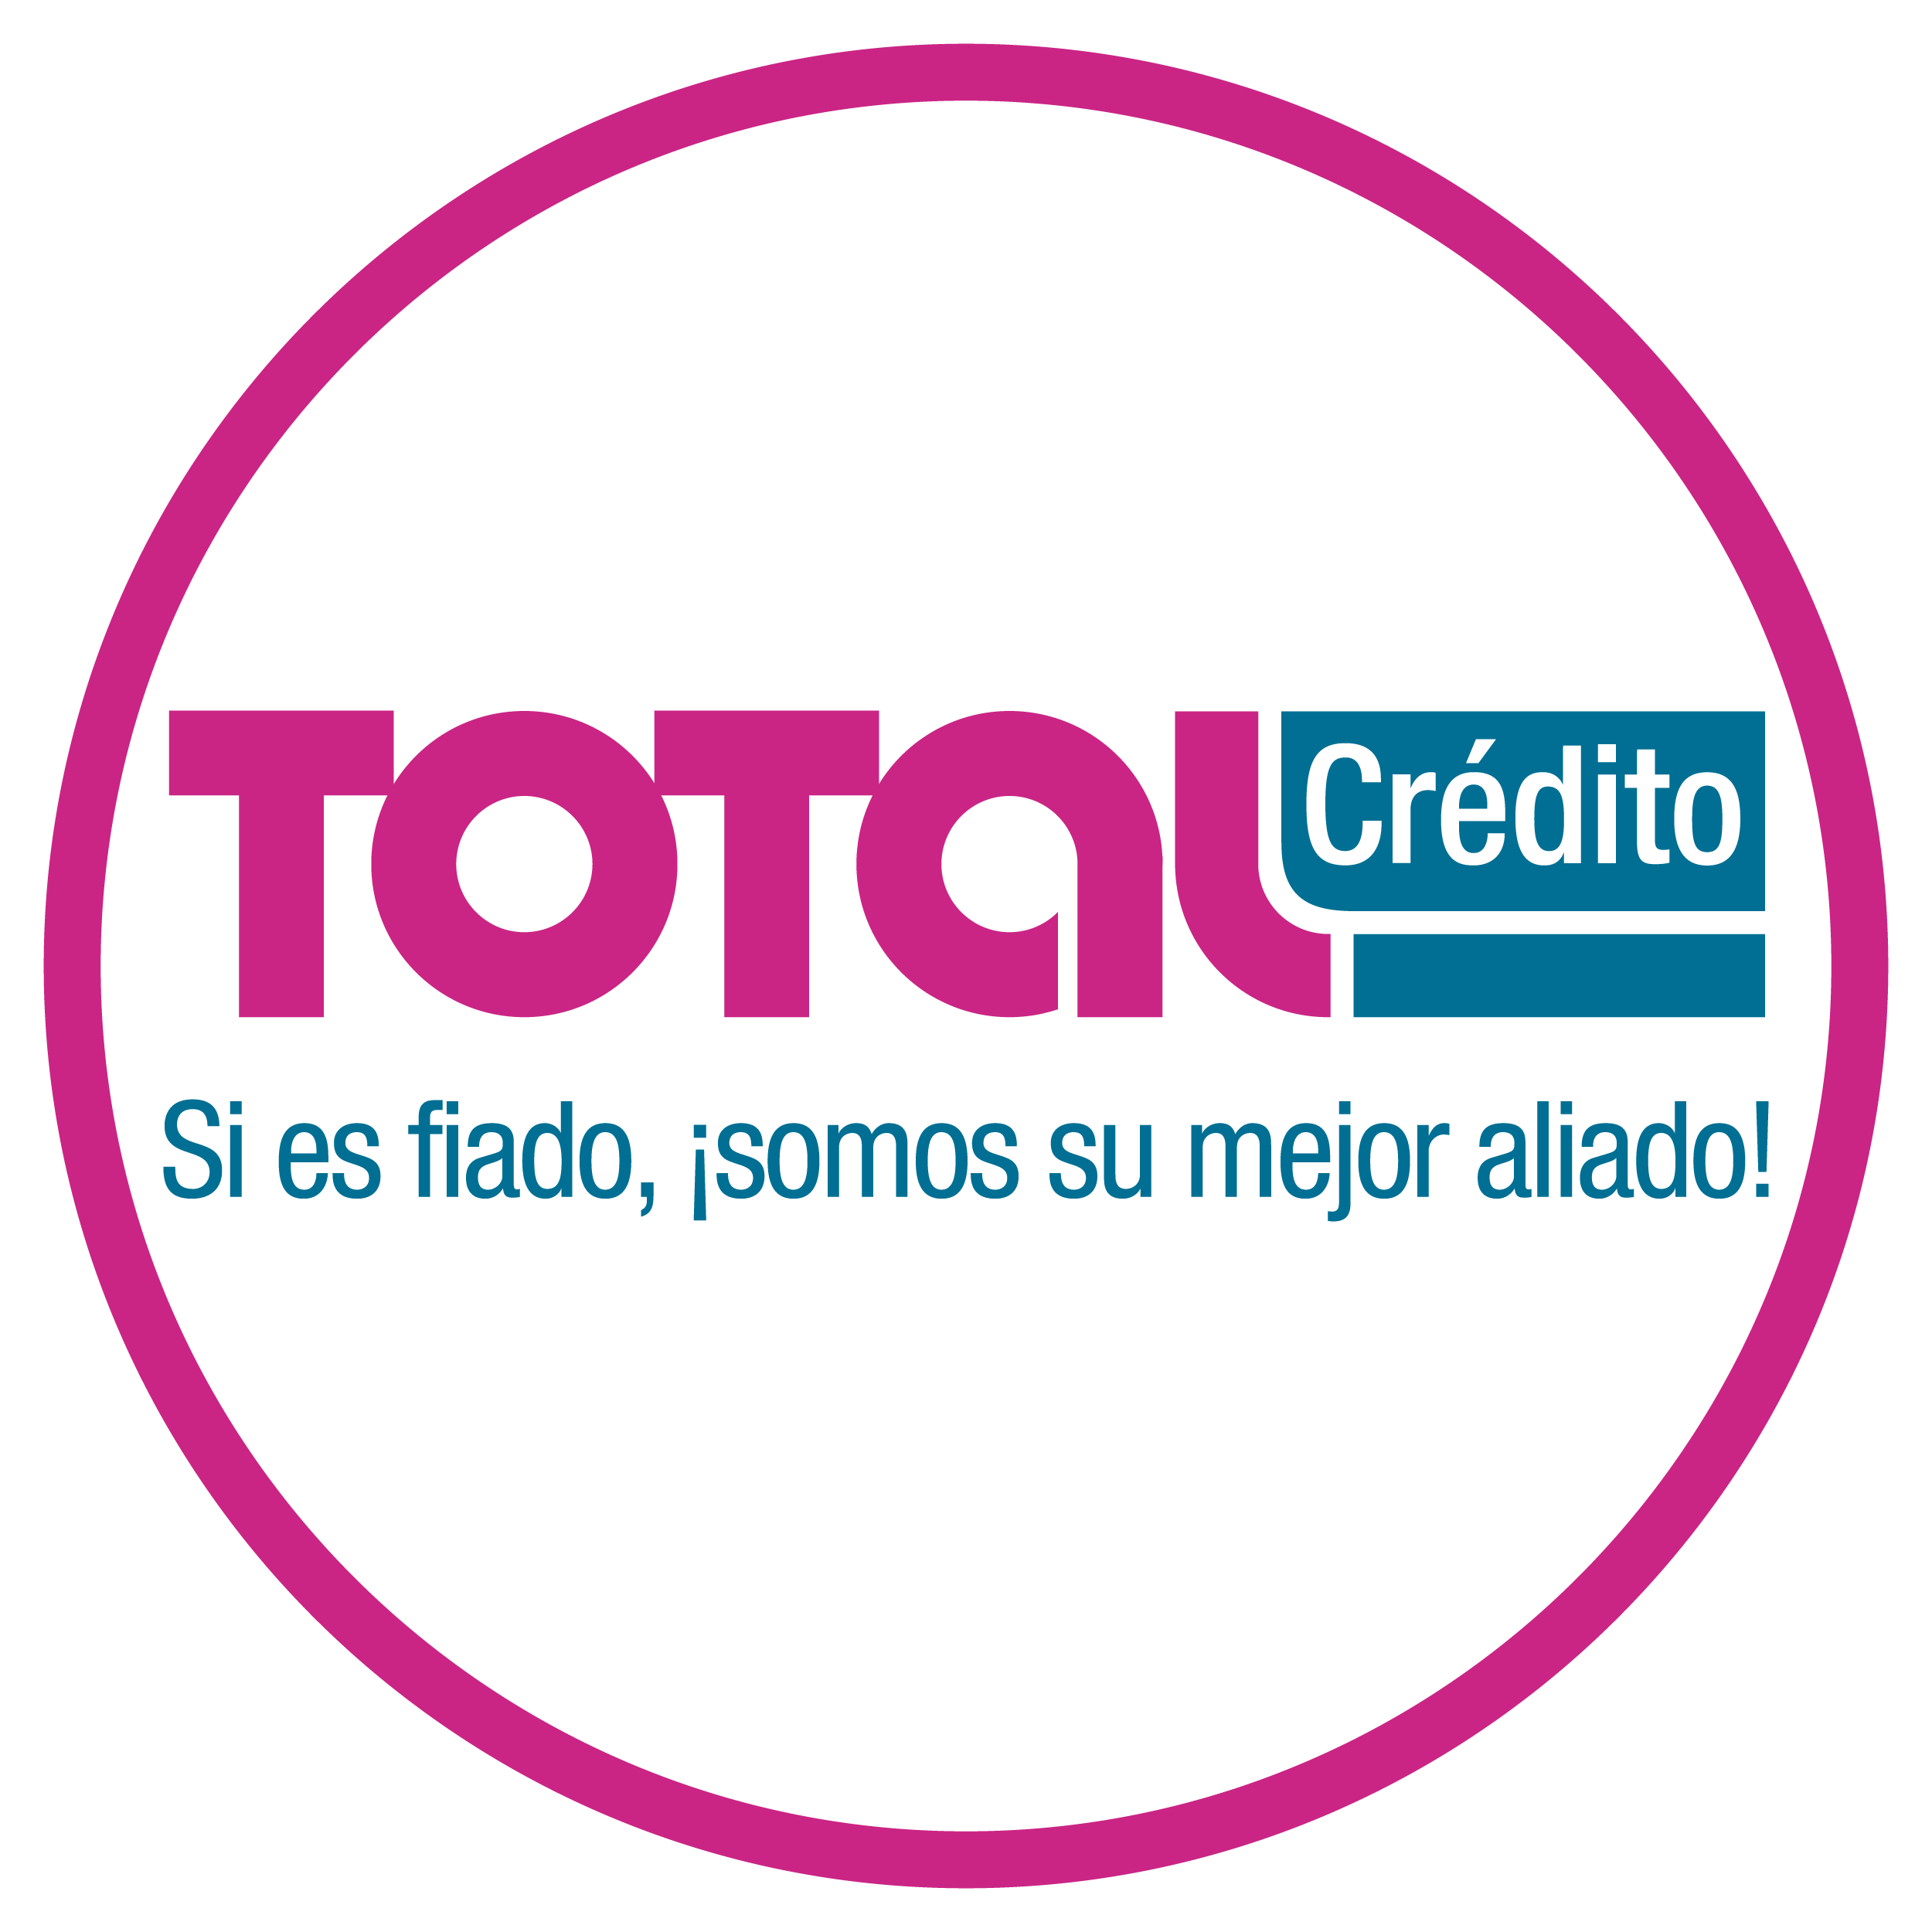 Total Crédito